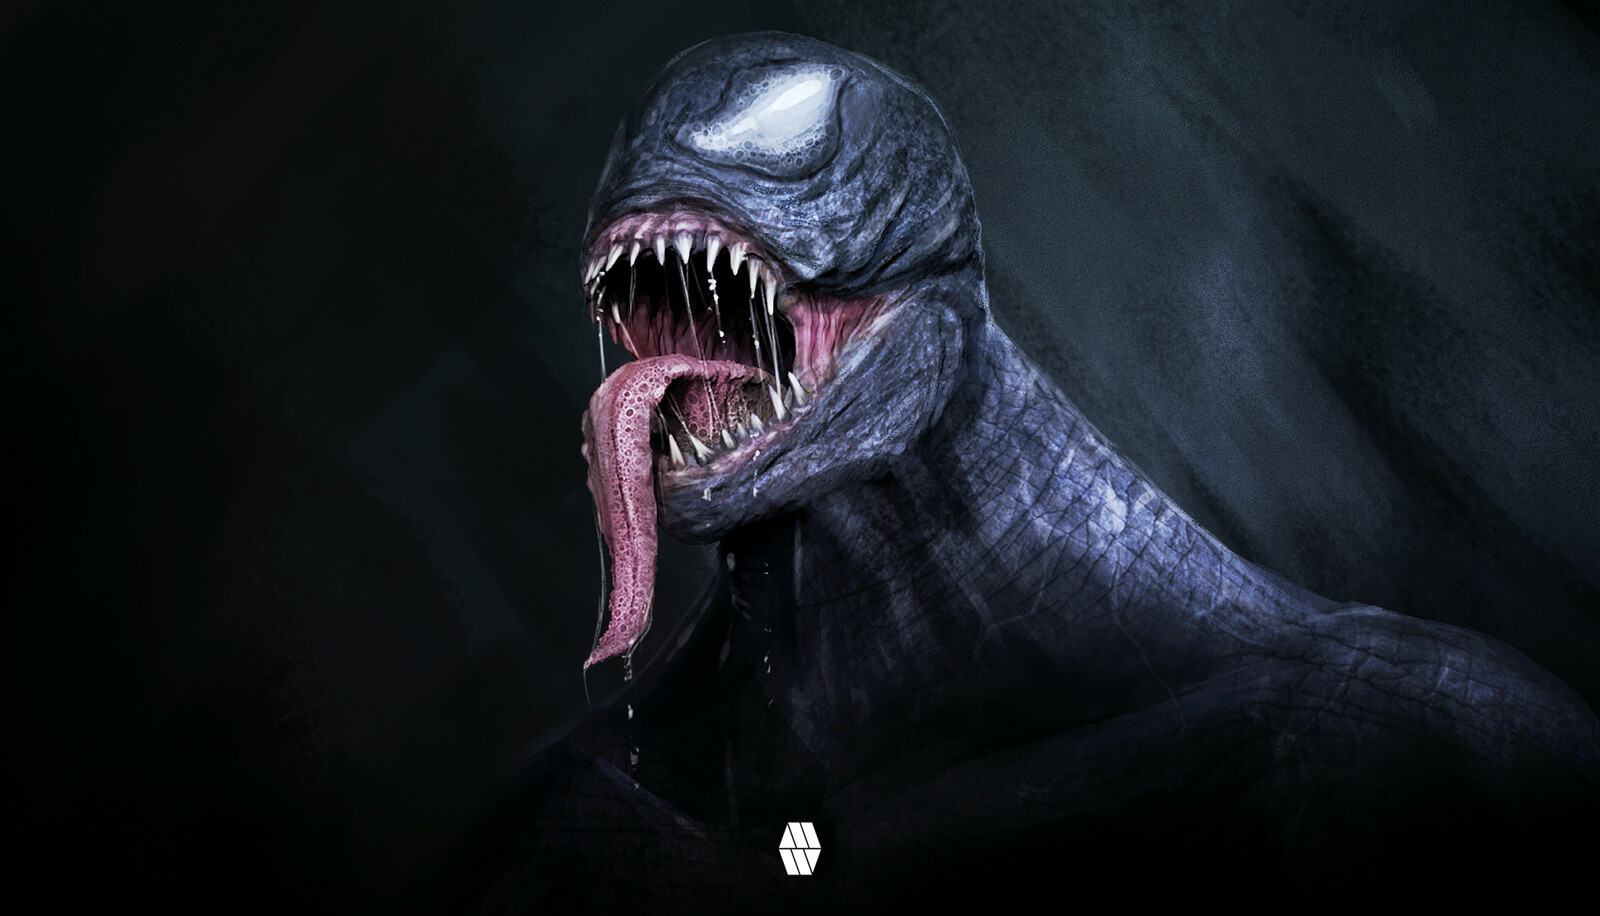 Venom Bust Concept - Personal Project